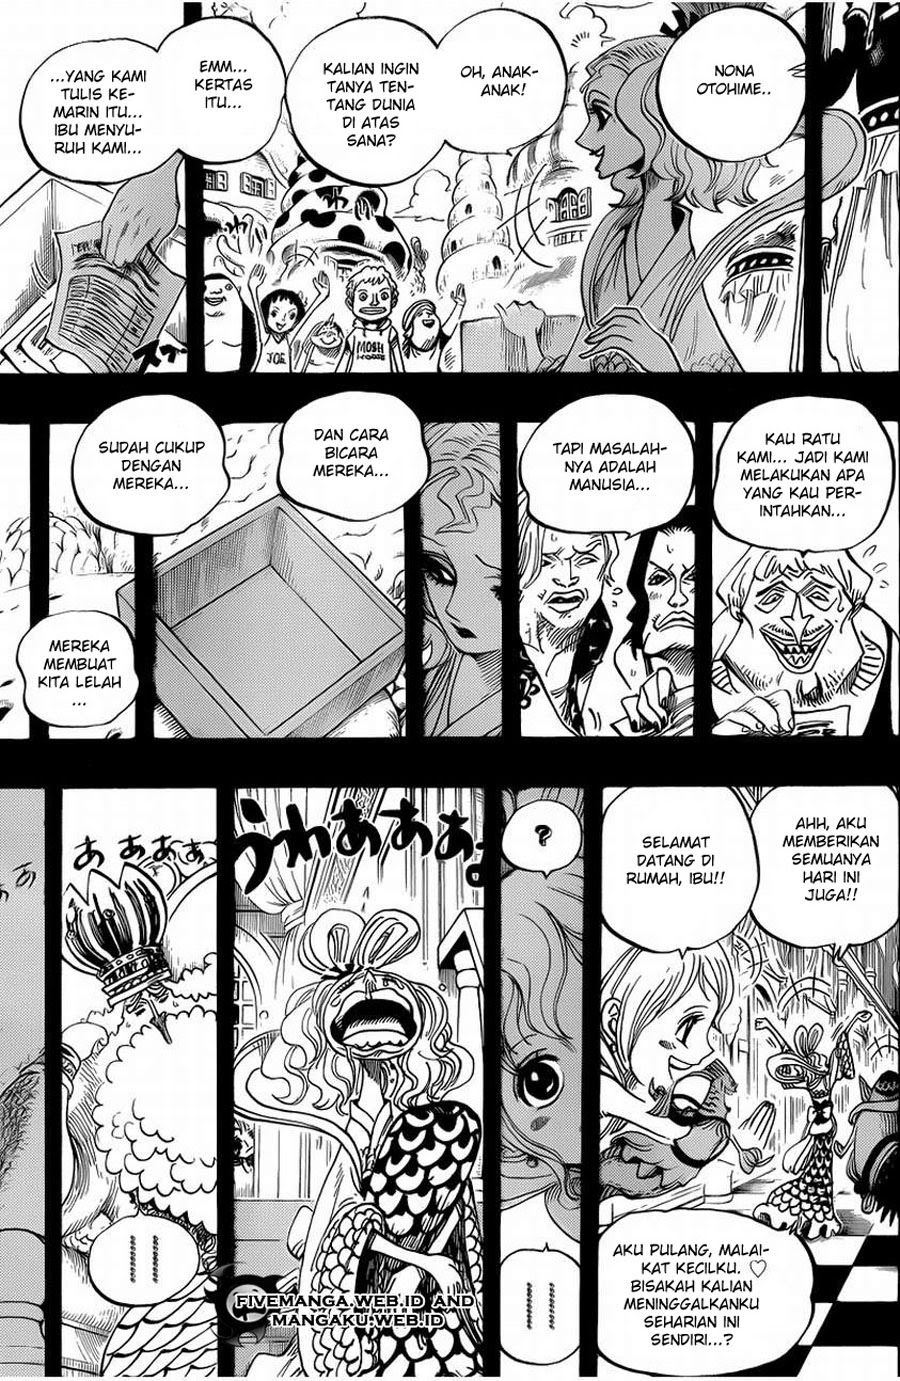 One Piece Chapter 624 – Ratu Otohime - 125